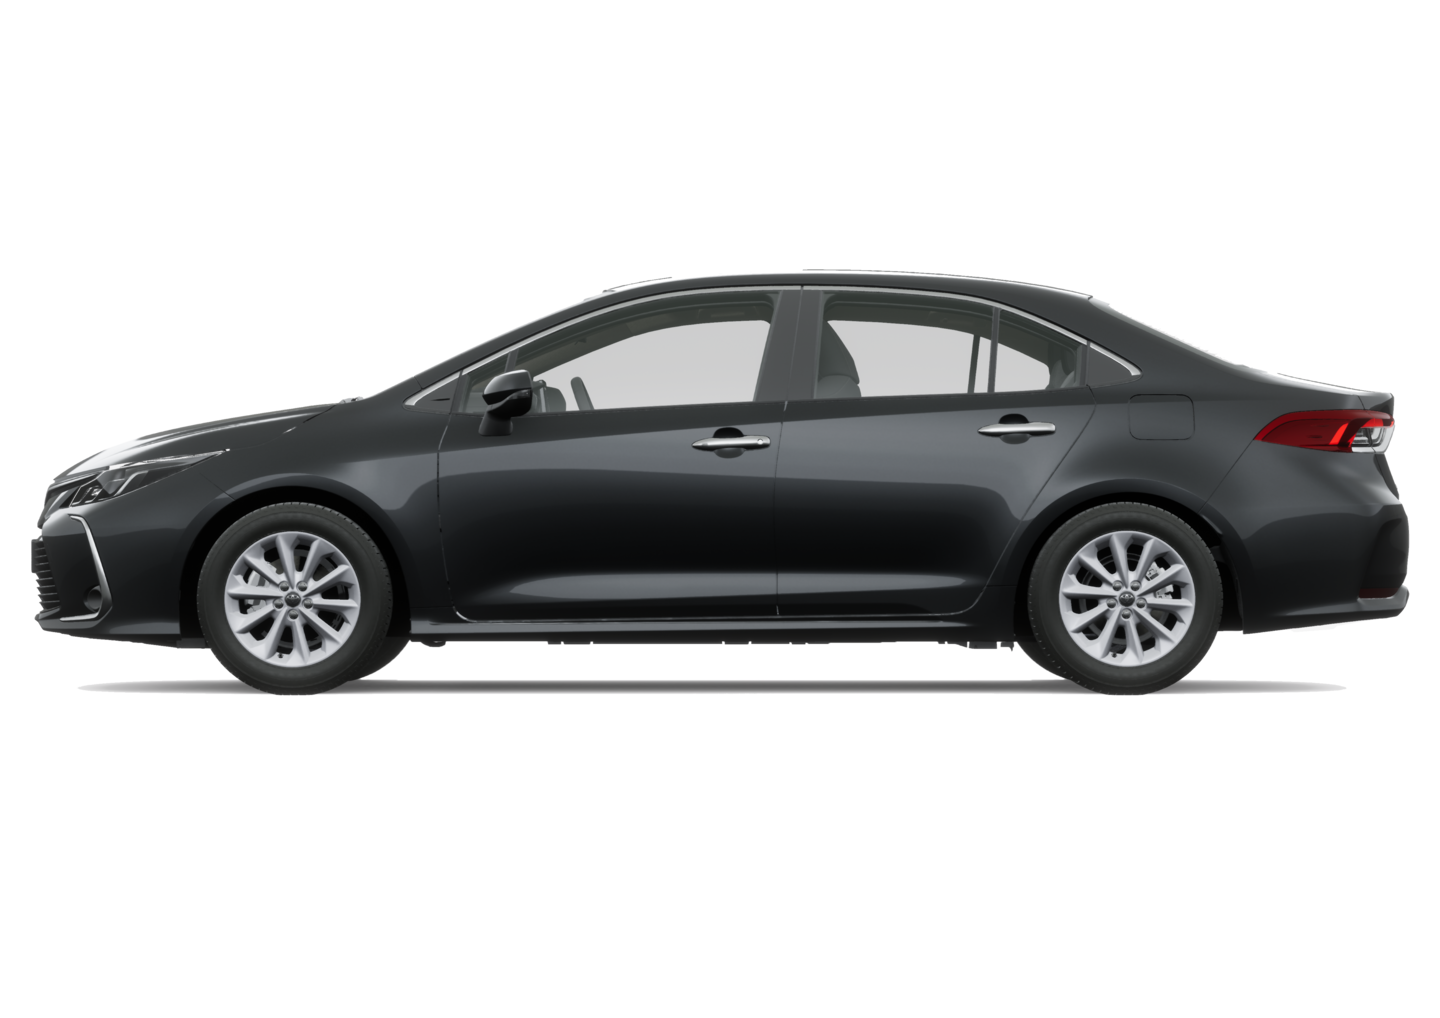 Toyota Corolla exterior - Side Profile